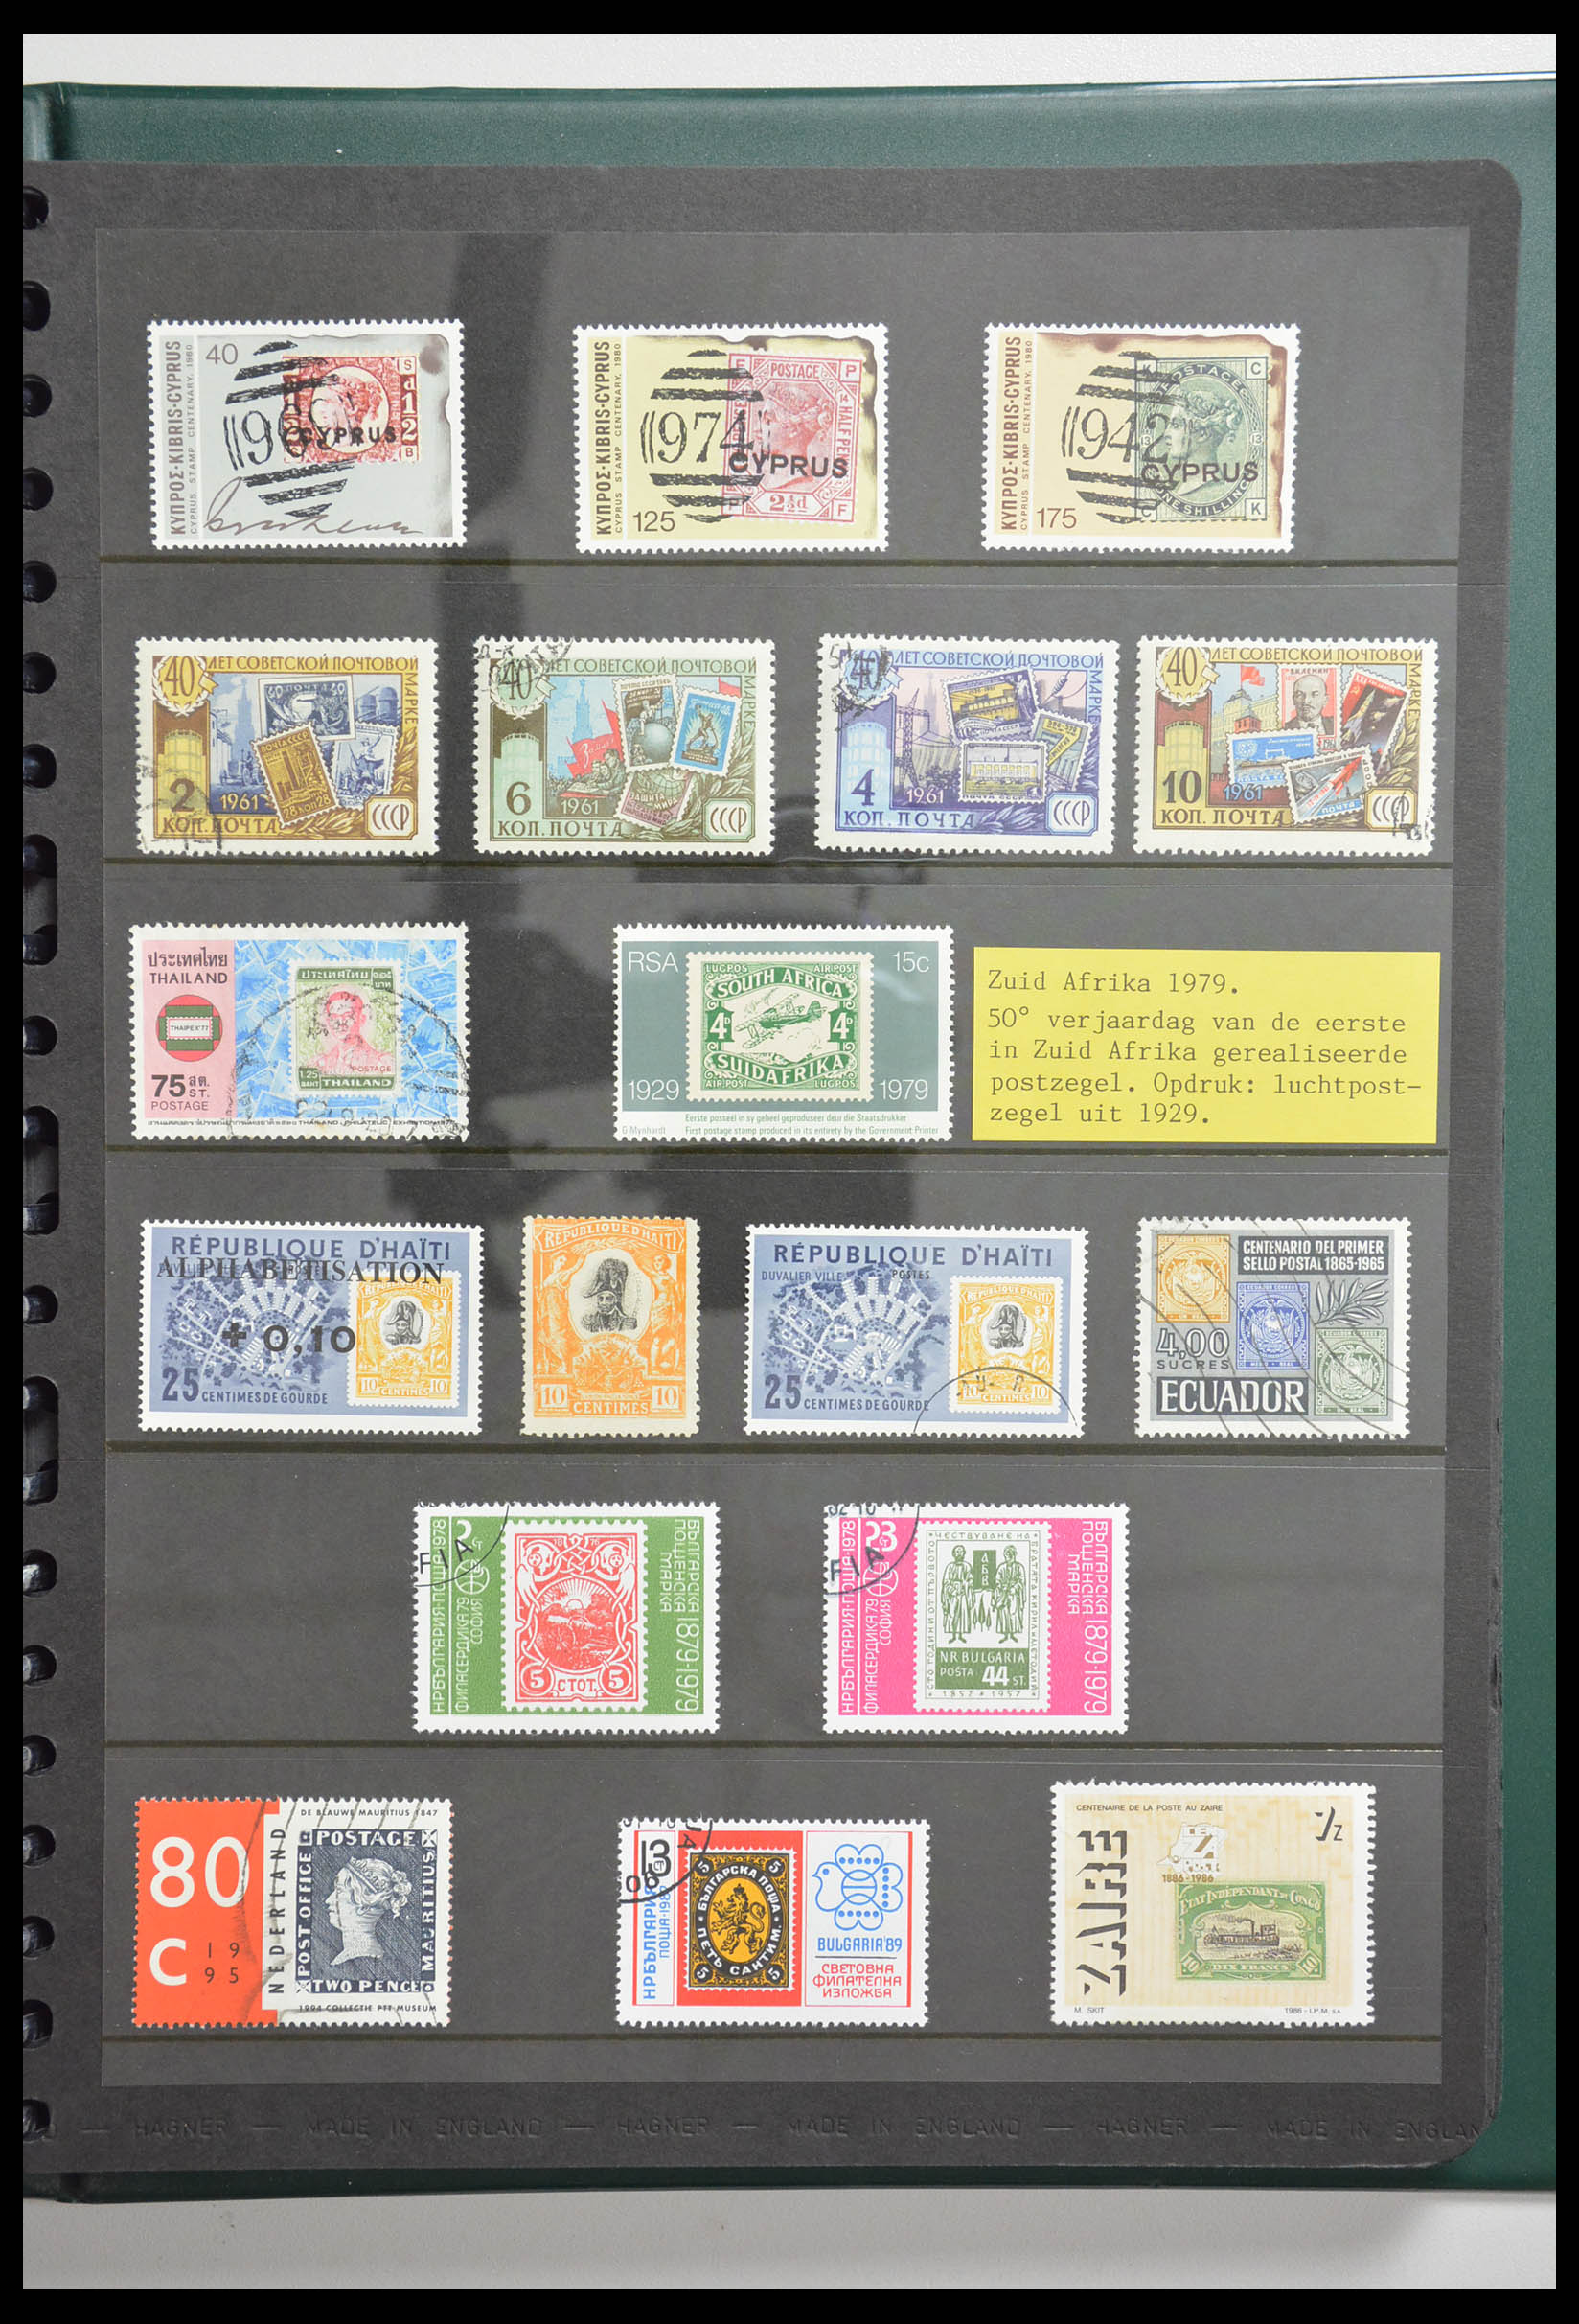 28337 021 - 28337 Postzegel op postzegel 1840-2001.